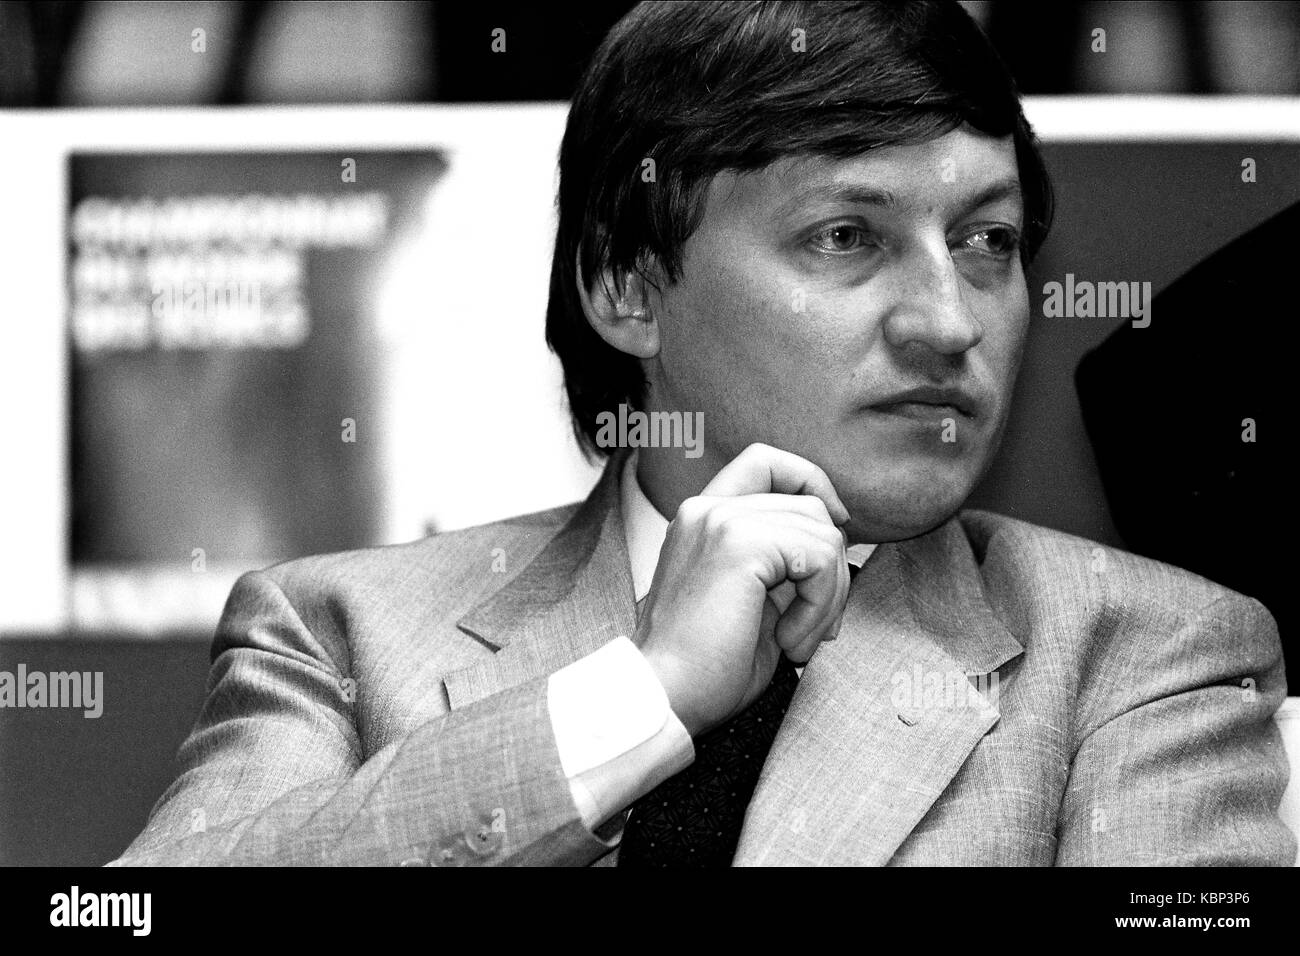 Karpov kasparov Black and White Stock Photos & Images - Alamy